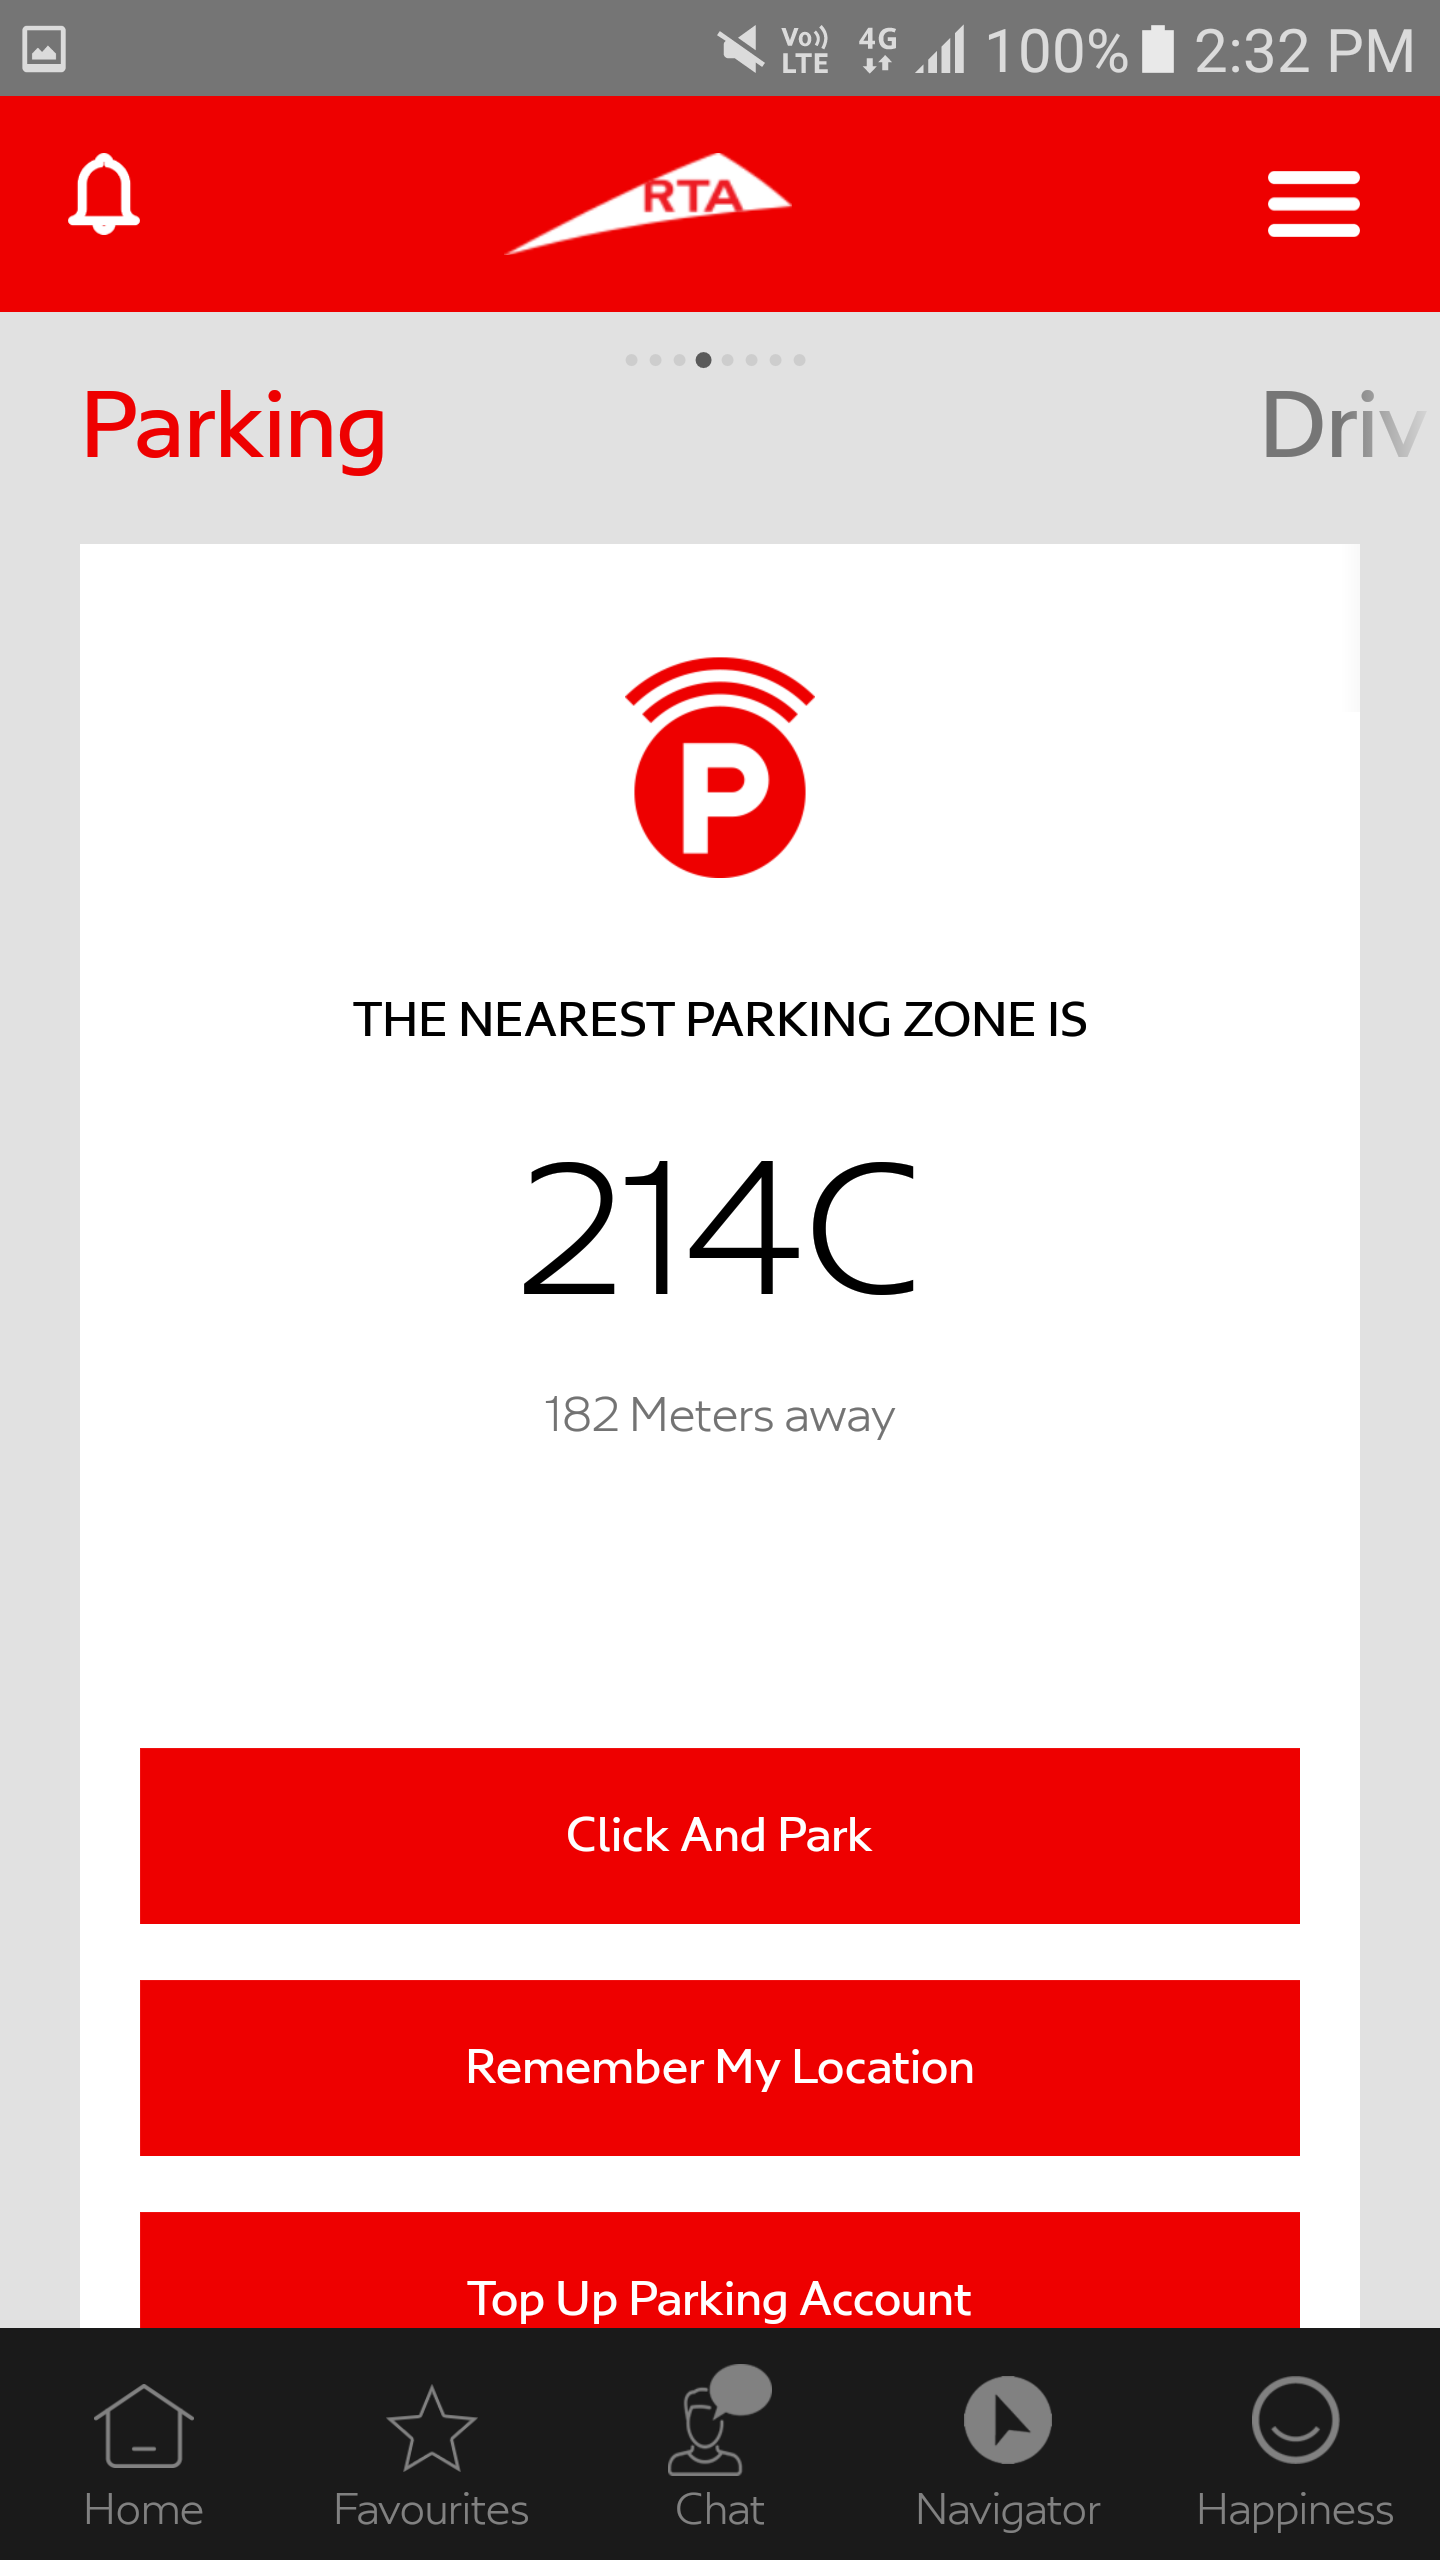 RTA Dubai App parking screen